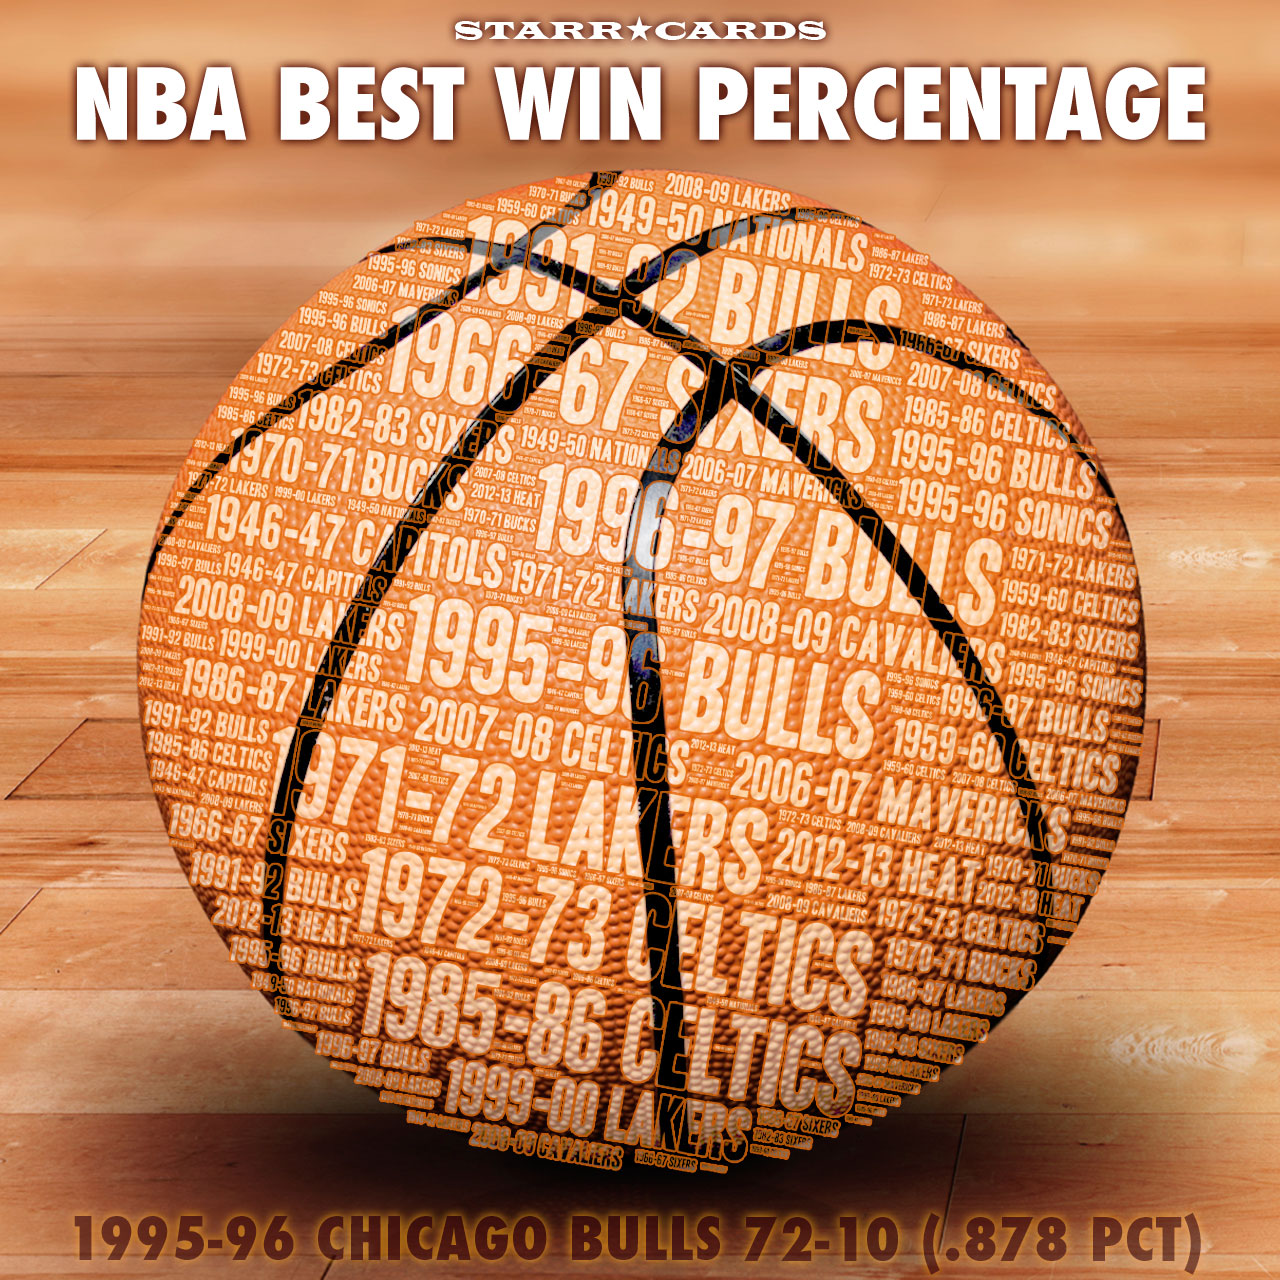 Starr Cards Infographic: NBA Single Season Best Win Percentage